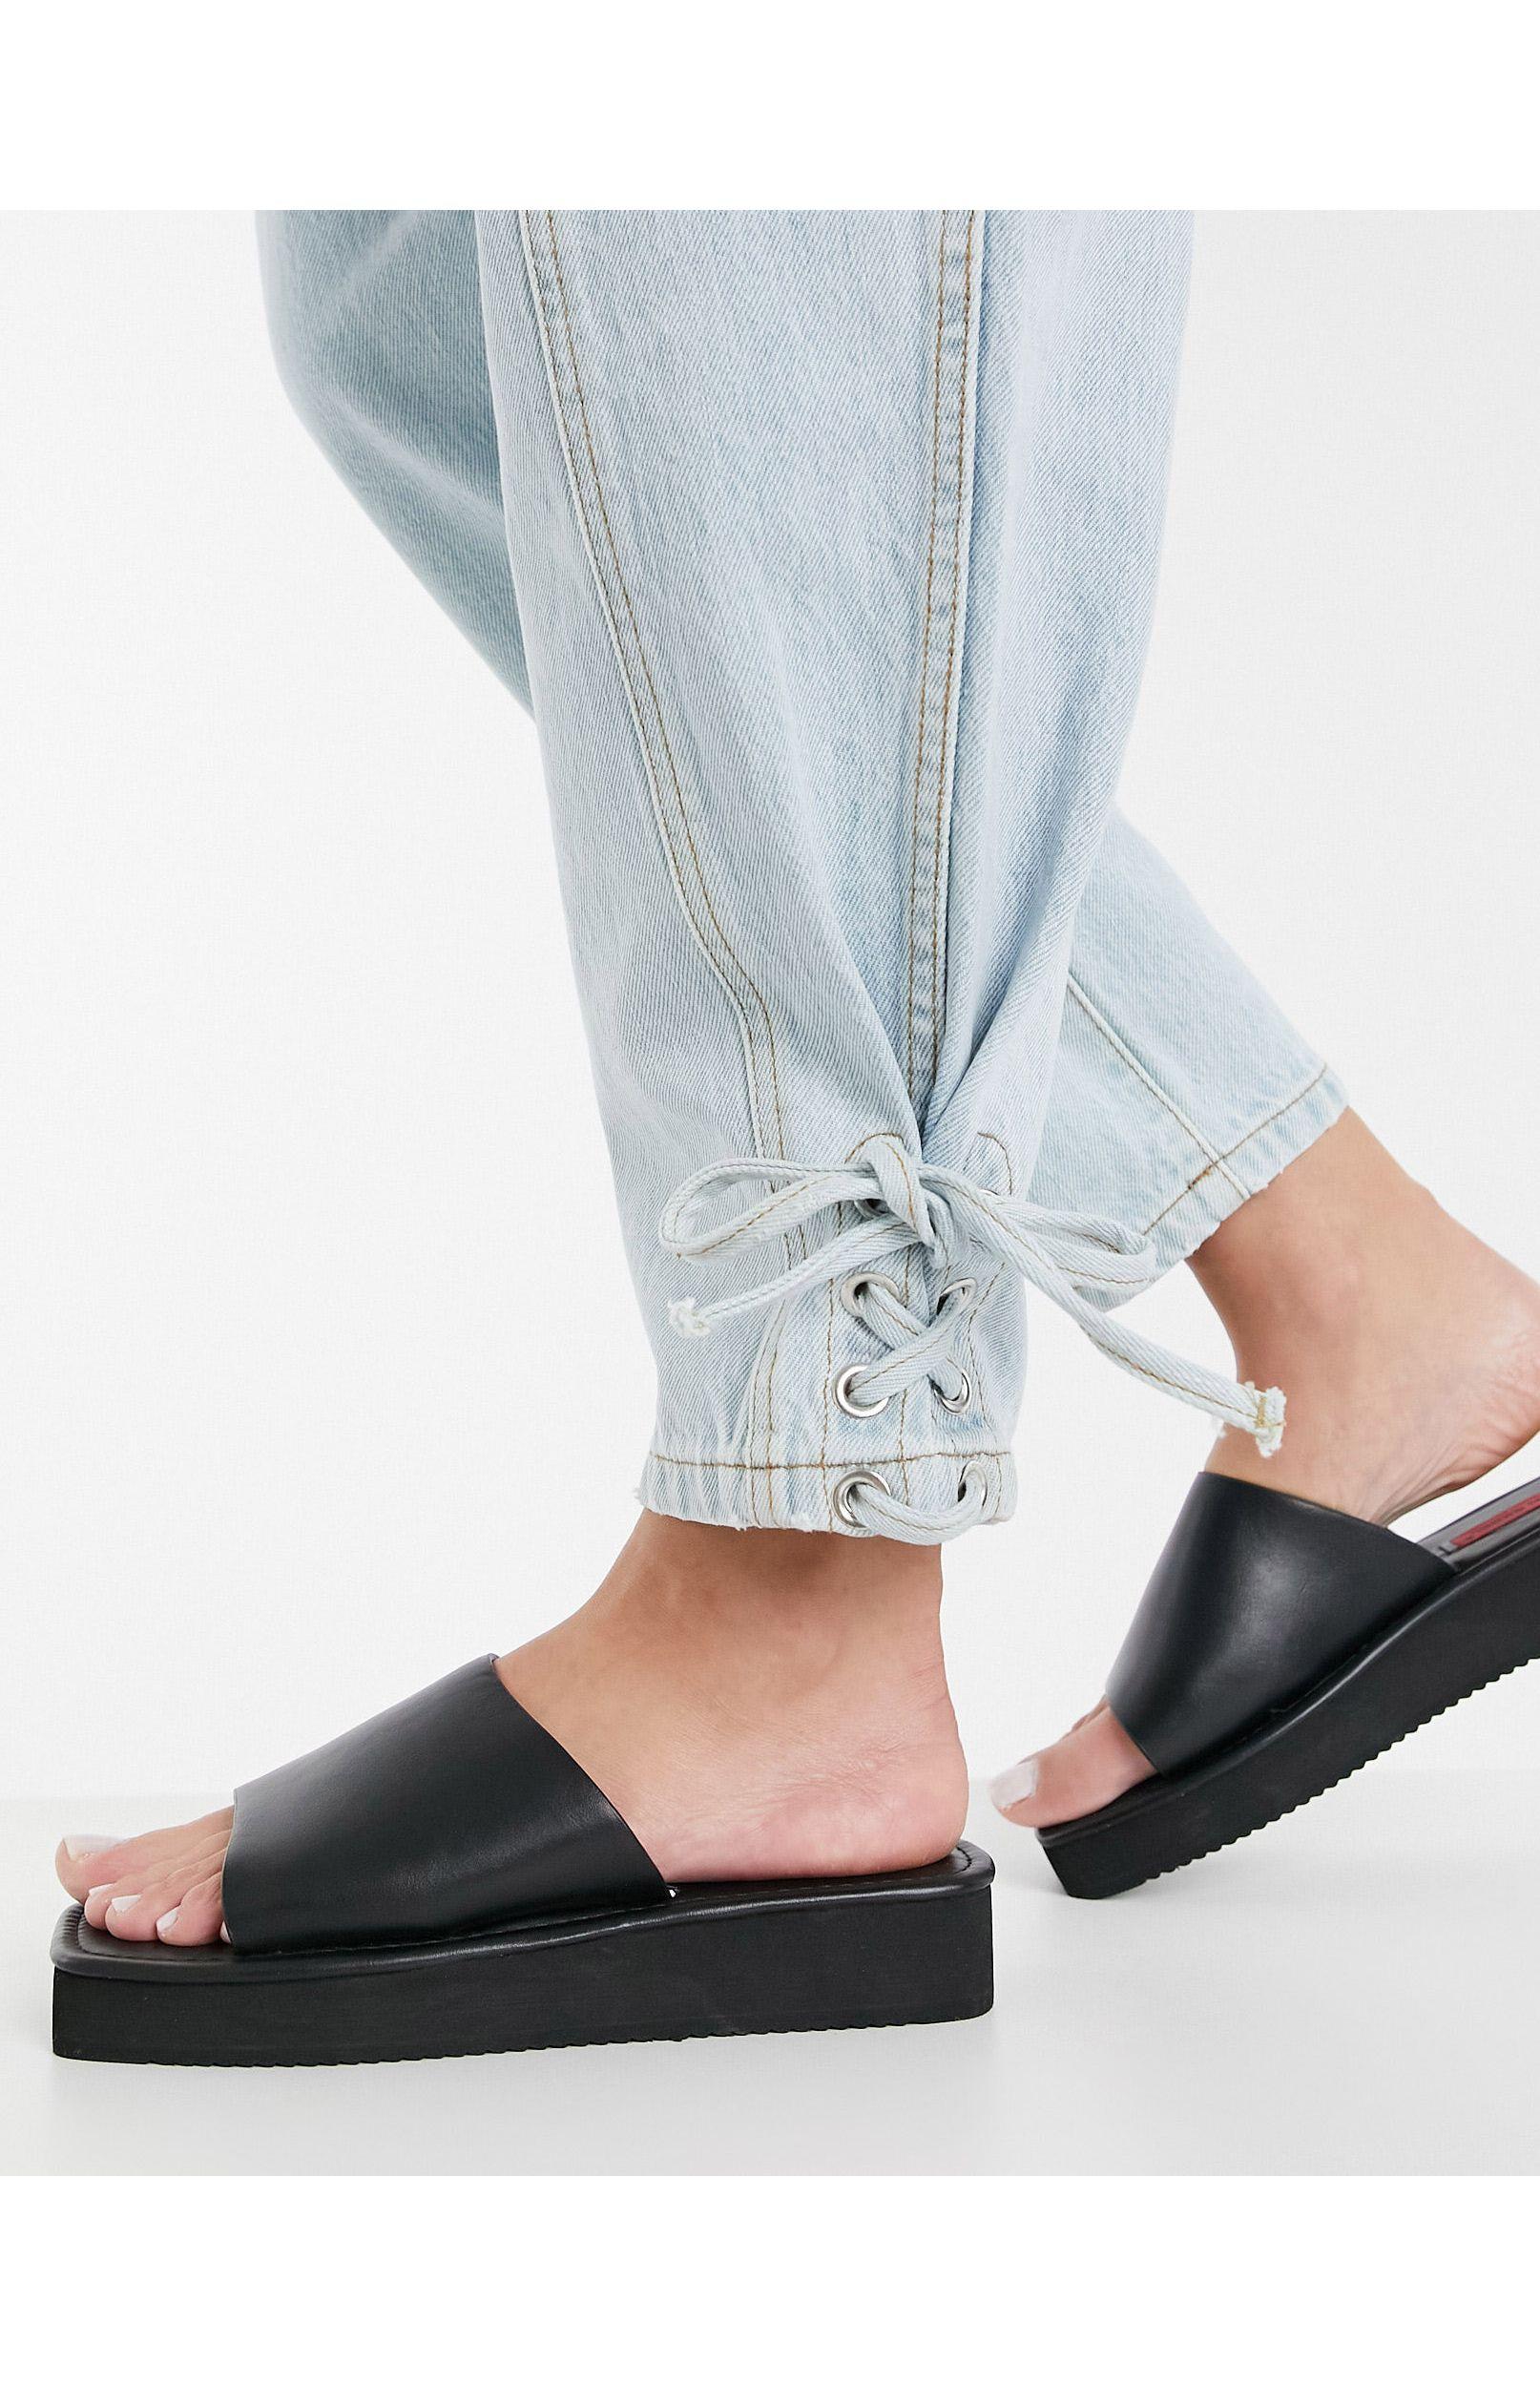 London Rebel Mini Flatform Nineties Sandals With Square Toe in Black - Lyst